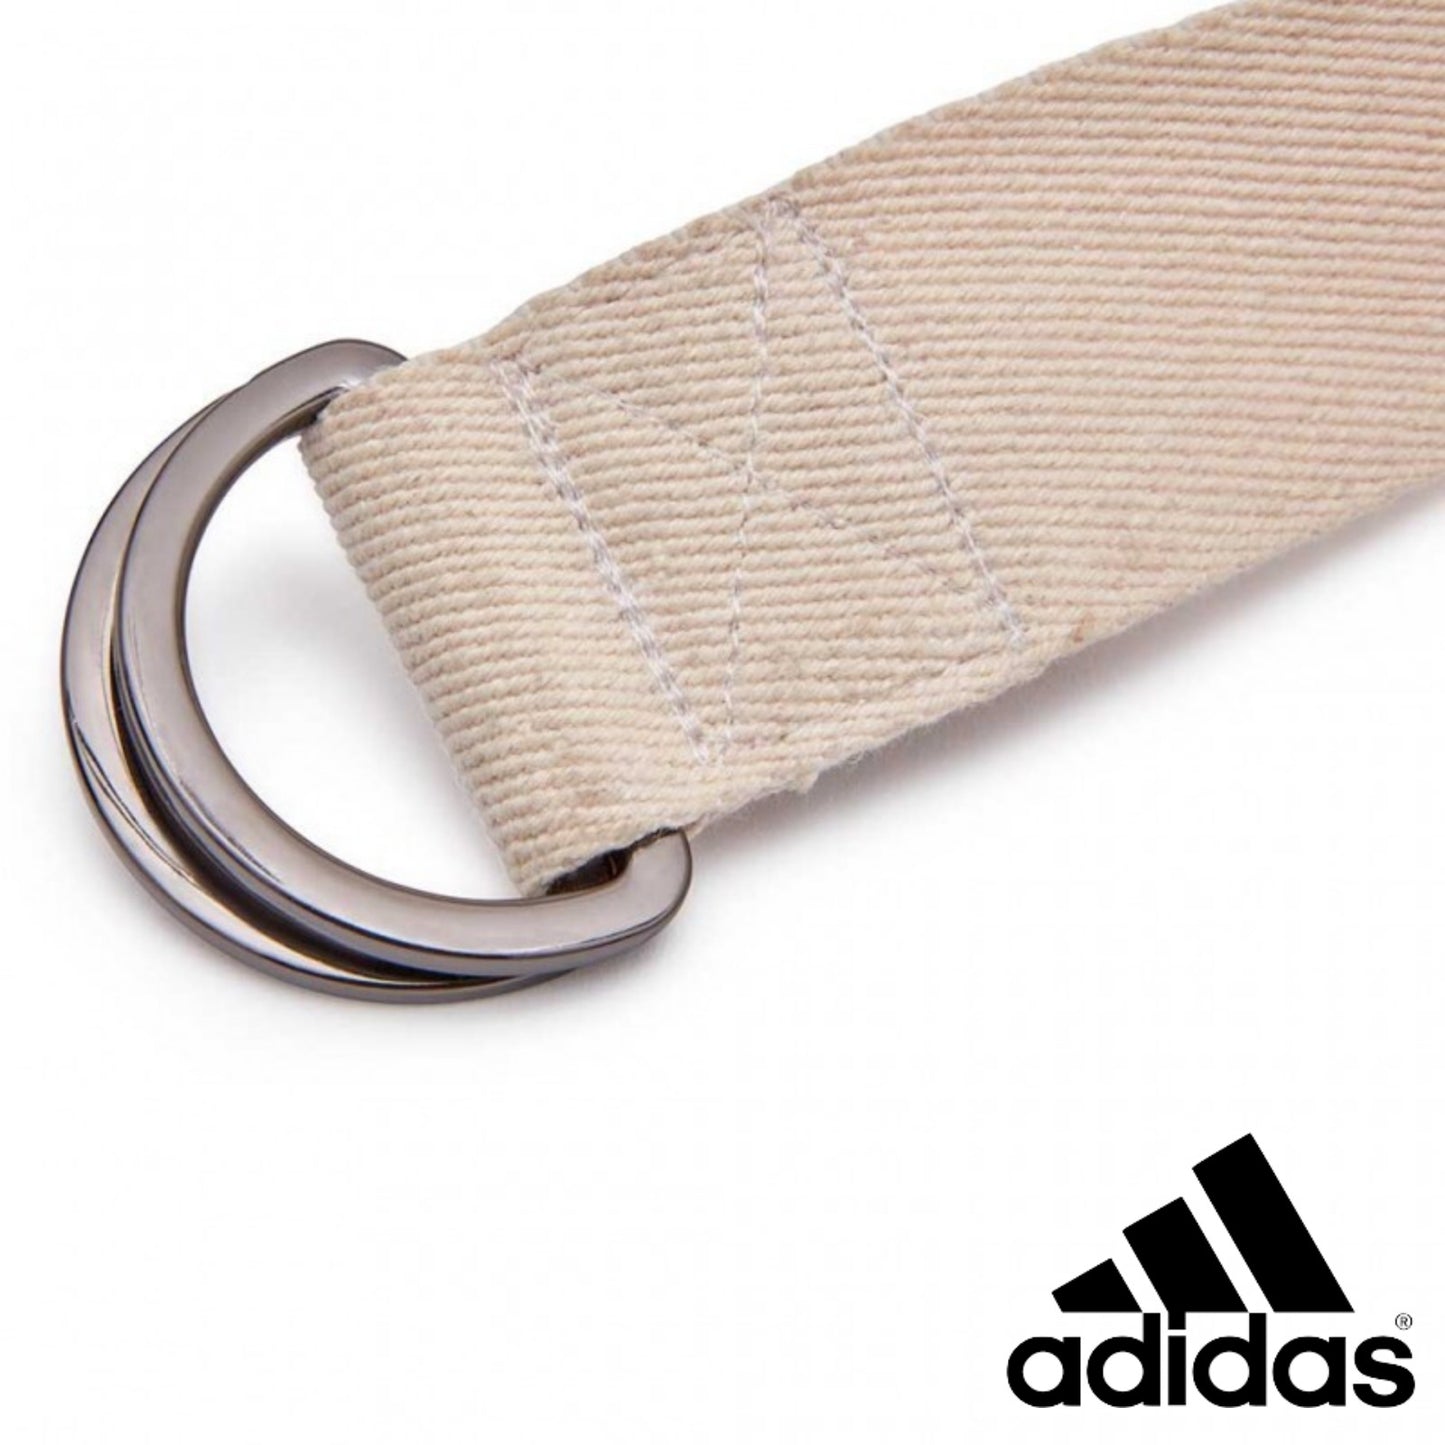 2pc Set Adidas Stretch Assist Band Looped + Yoga Strap 2.5m Long Adjustable Belt